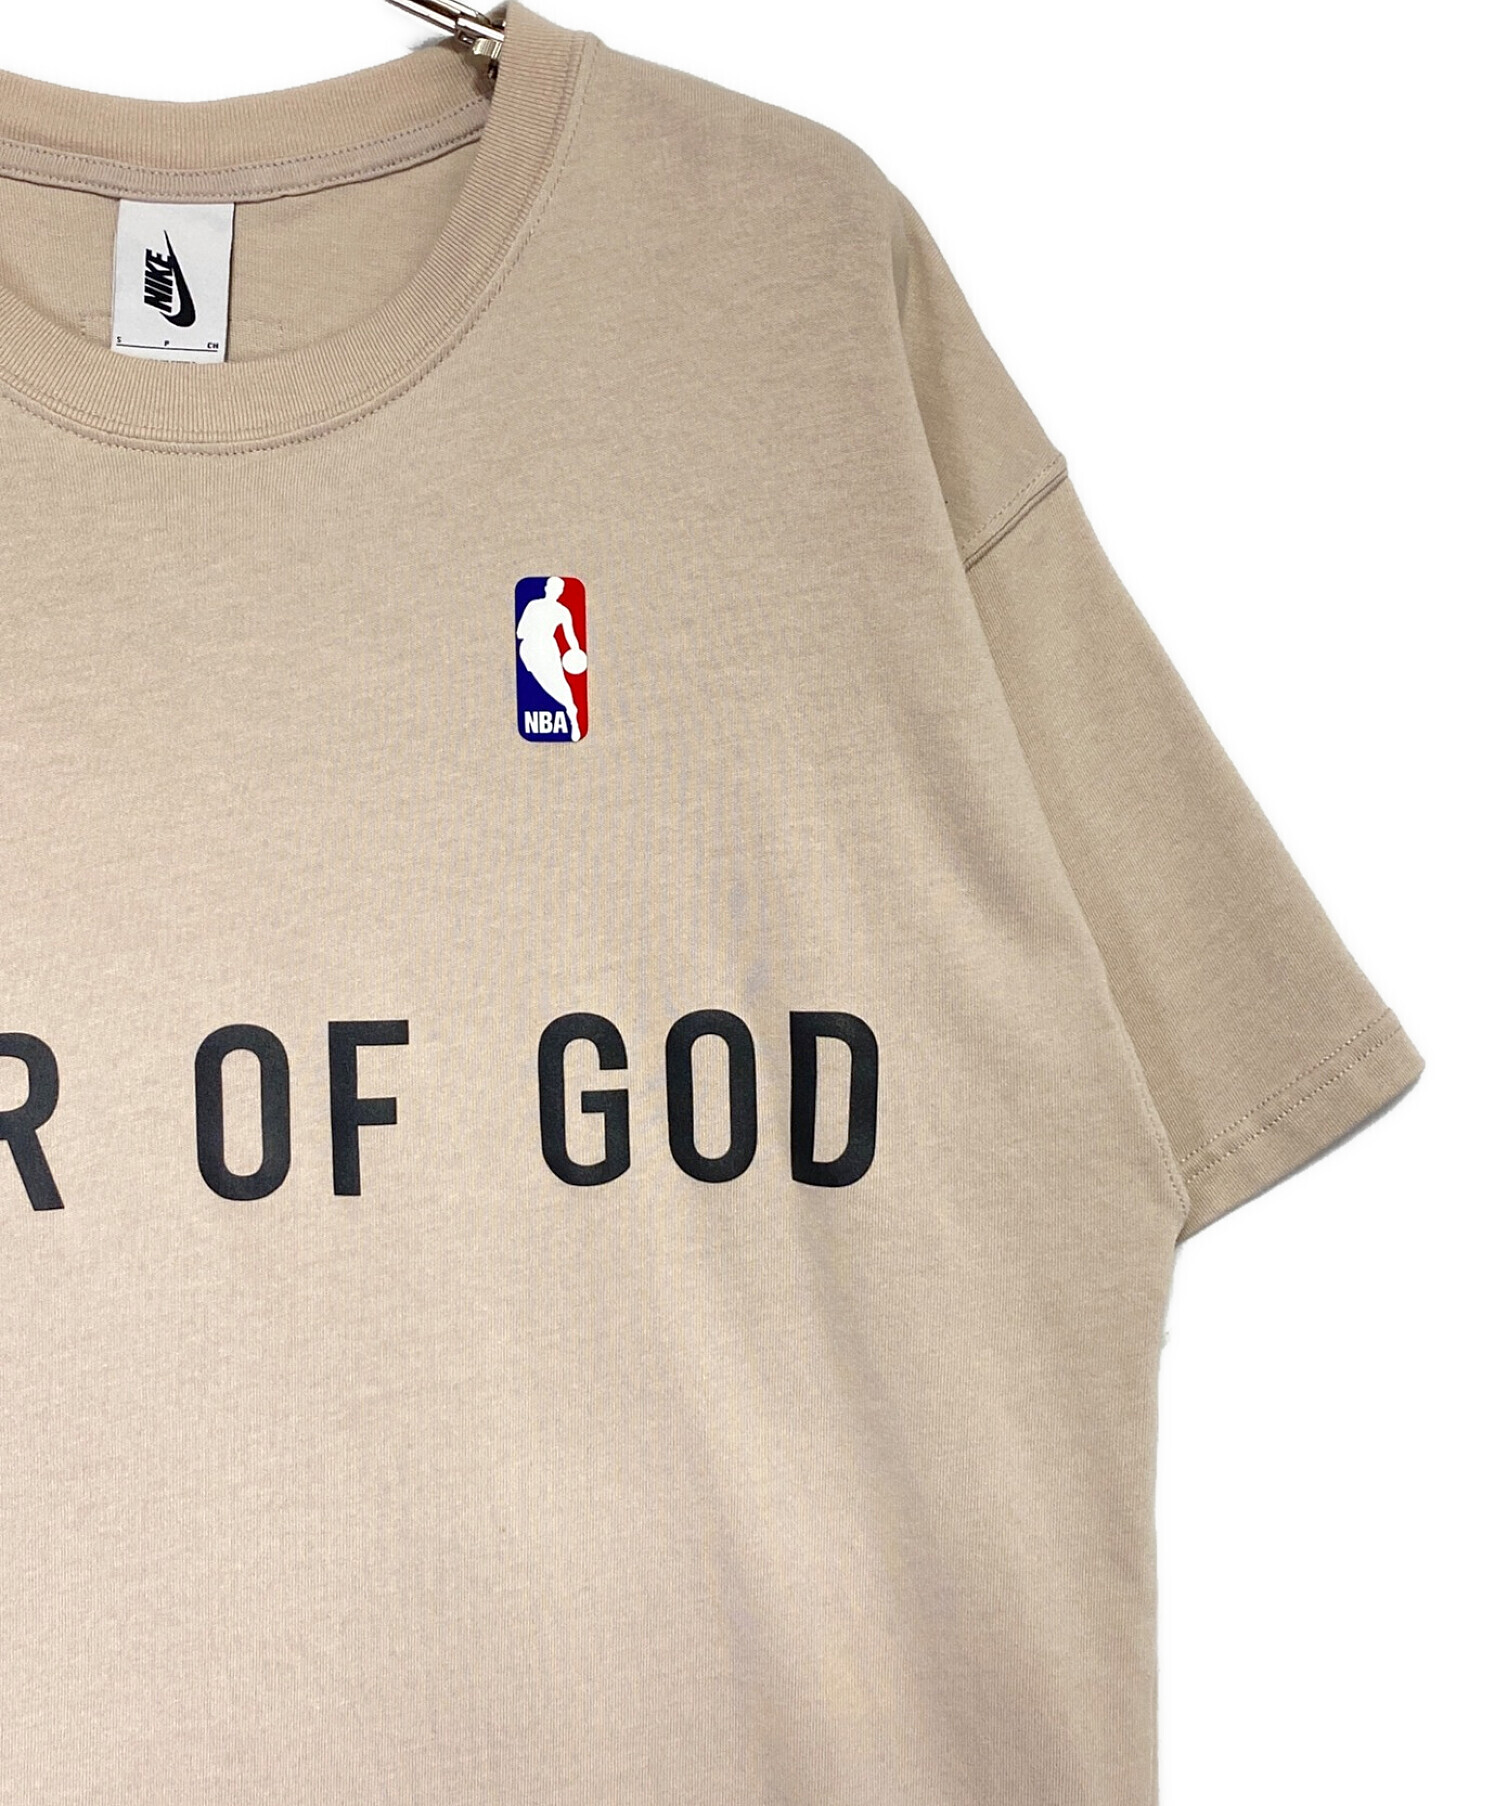 Fear Of God (フィア・オブ・ゴッド) NBA (エヌビーエー) NIKE (ナイキ) Tシャツ ベージュ サイズ:S